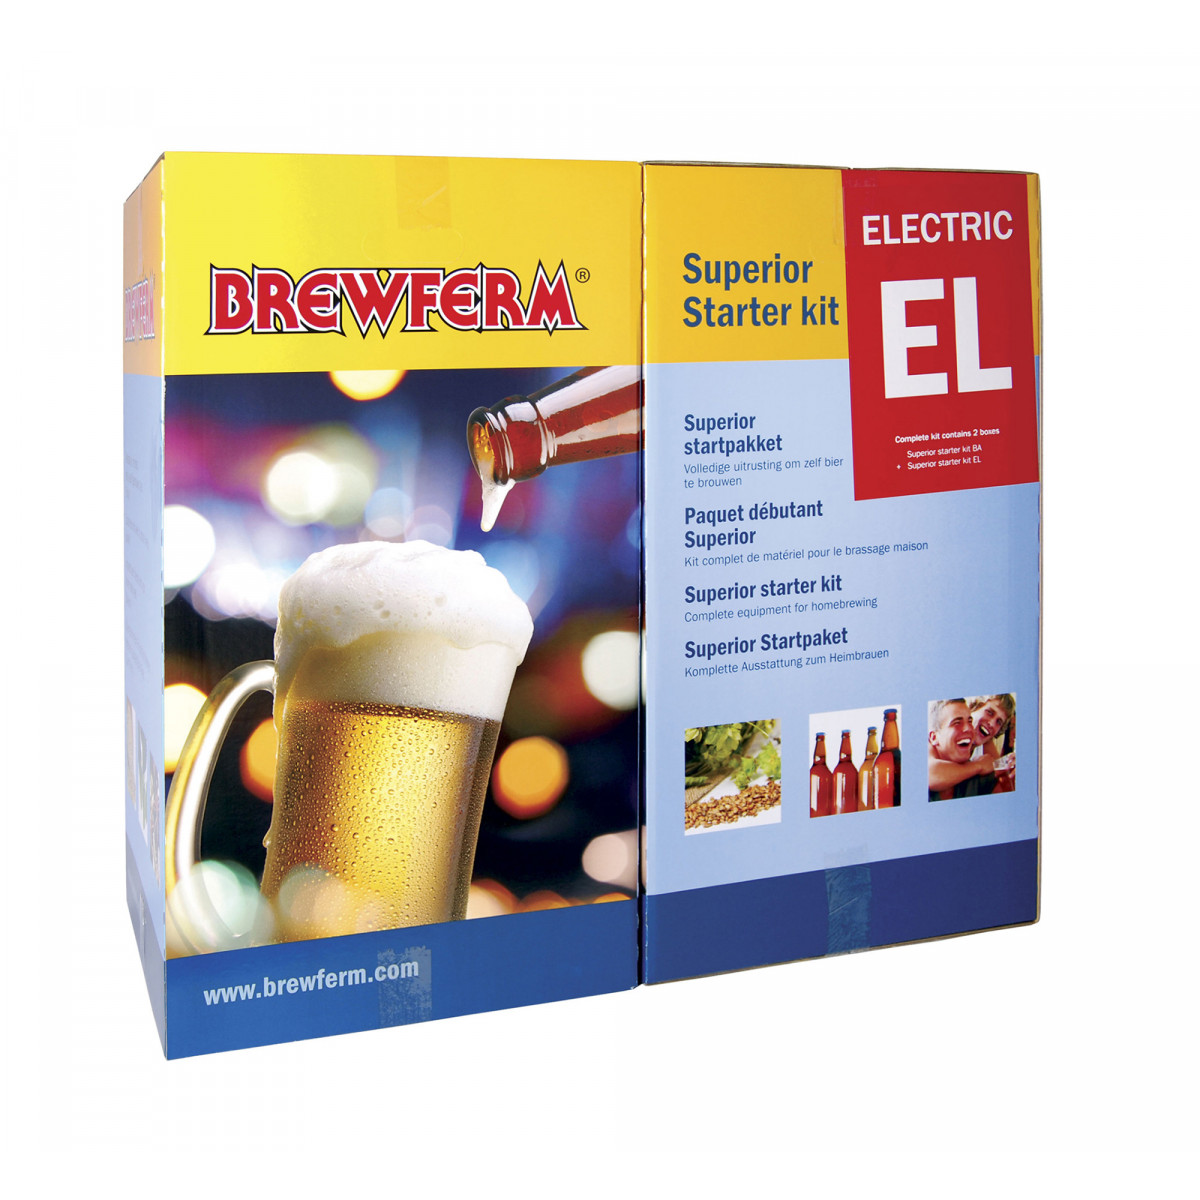 Brewferm Superior starter kit electric